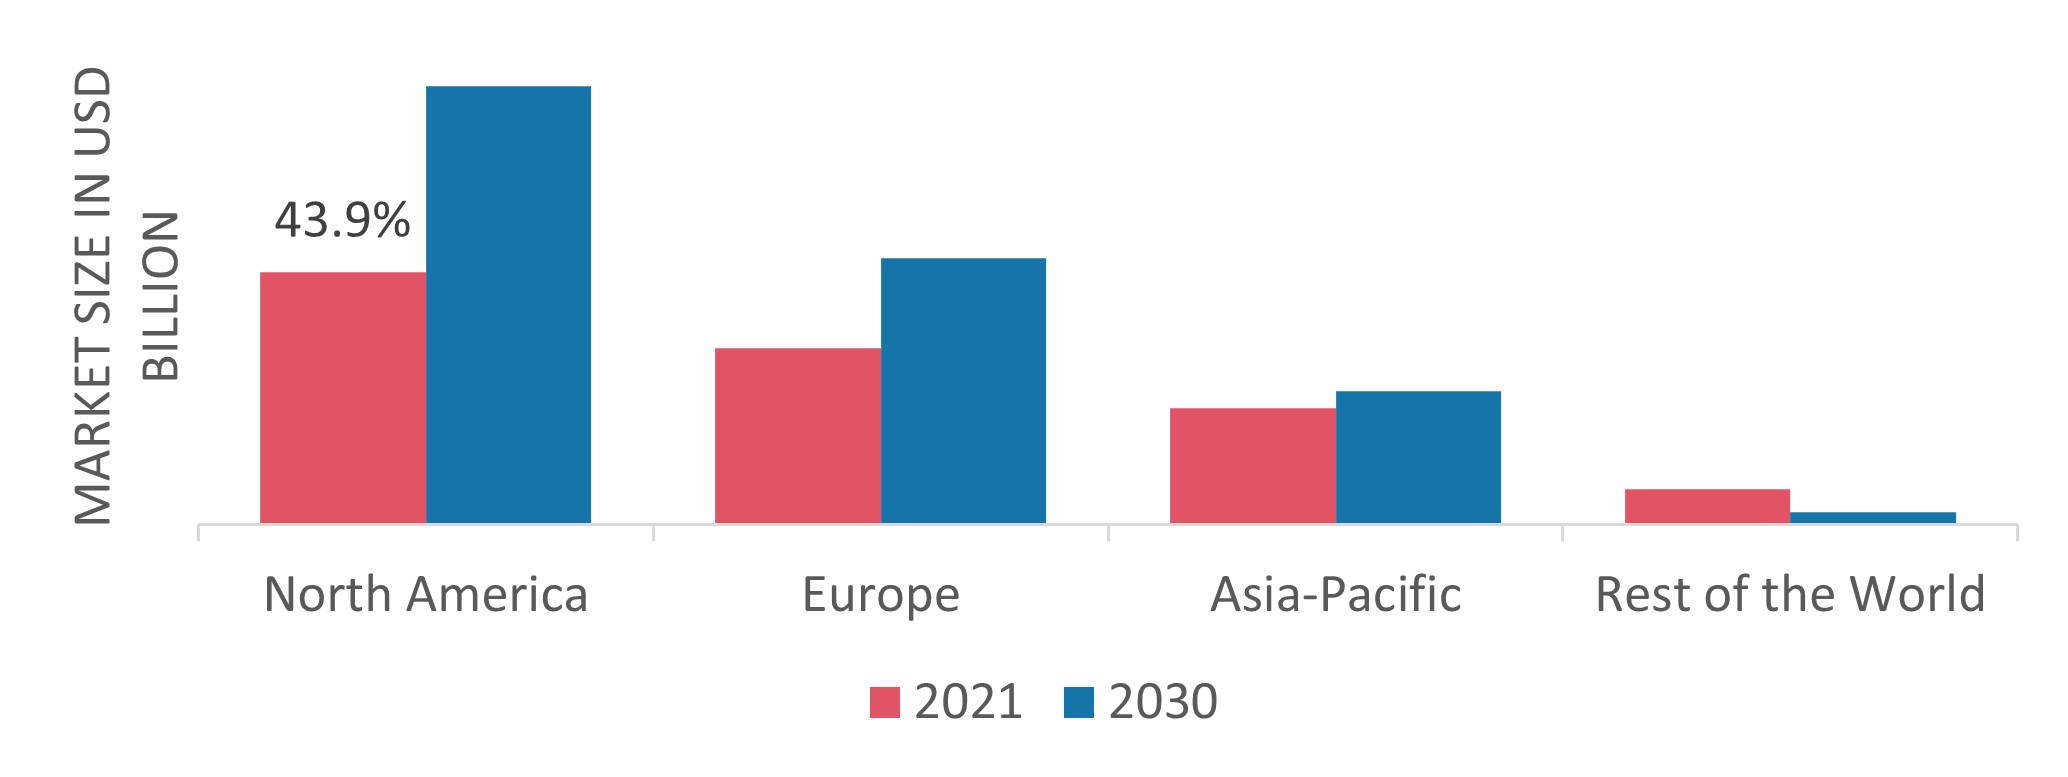 Polypropylene Market Size, Share & Forecast Report, 2030